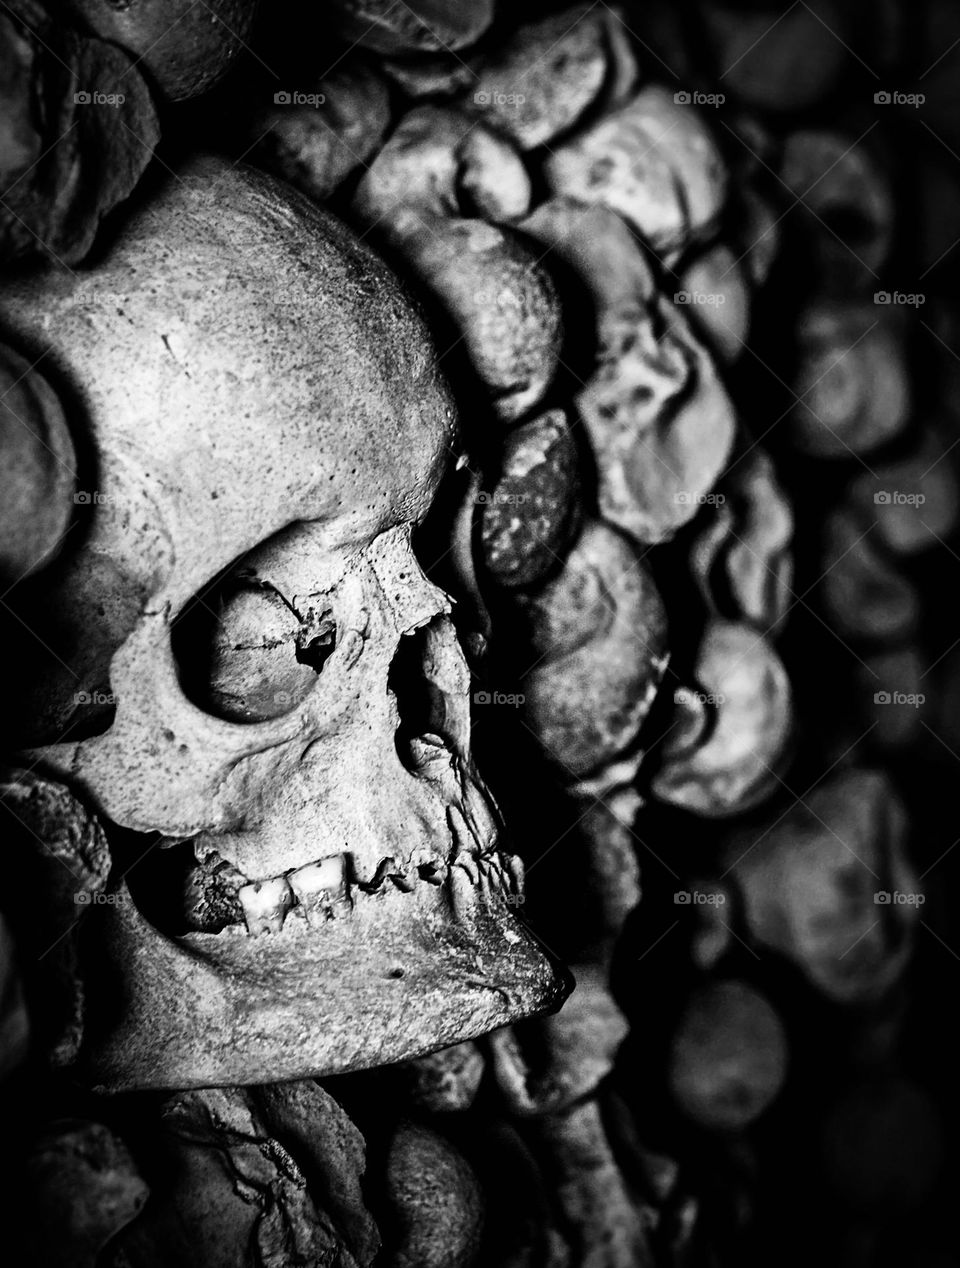 A human skull encased in a wall of leg bones.